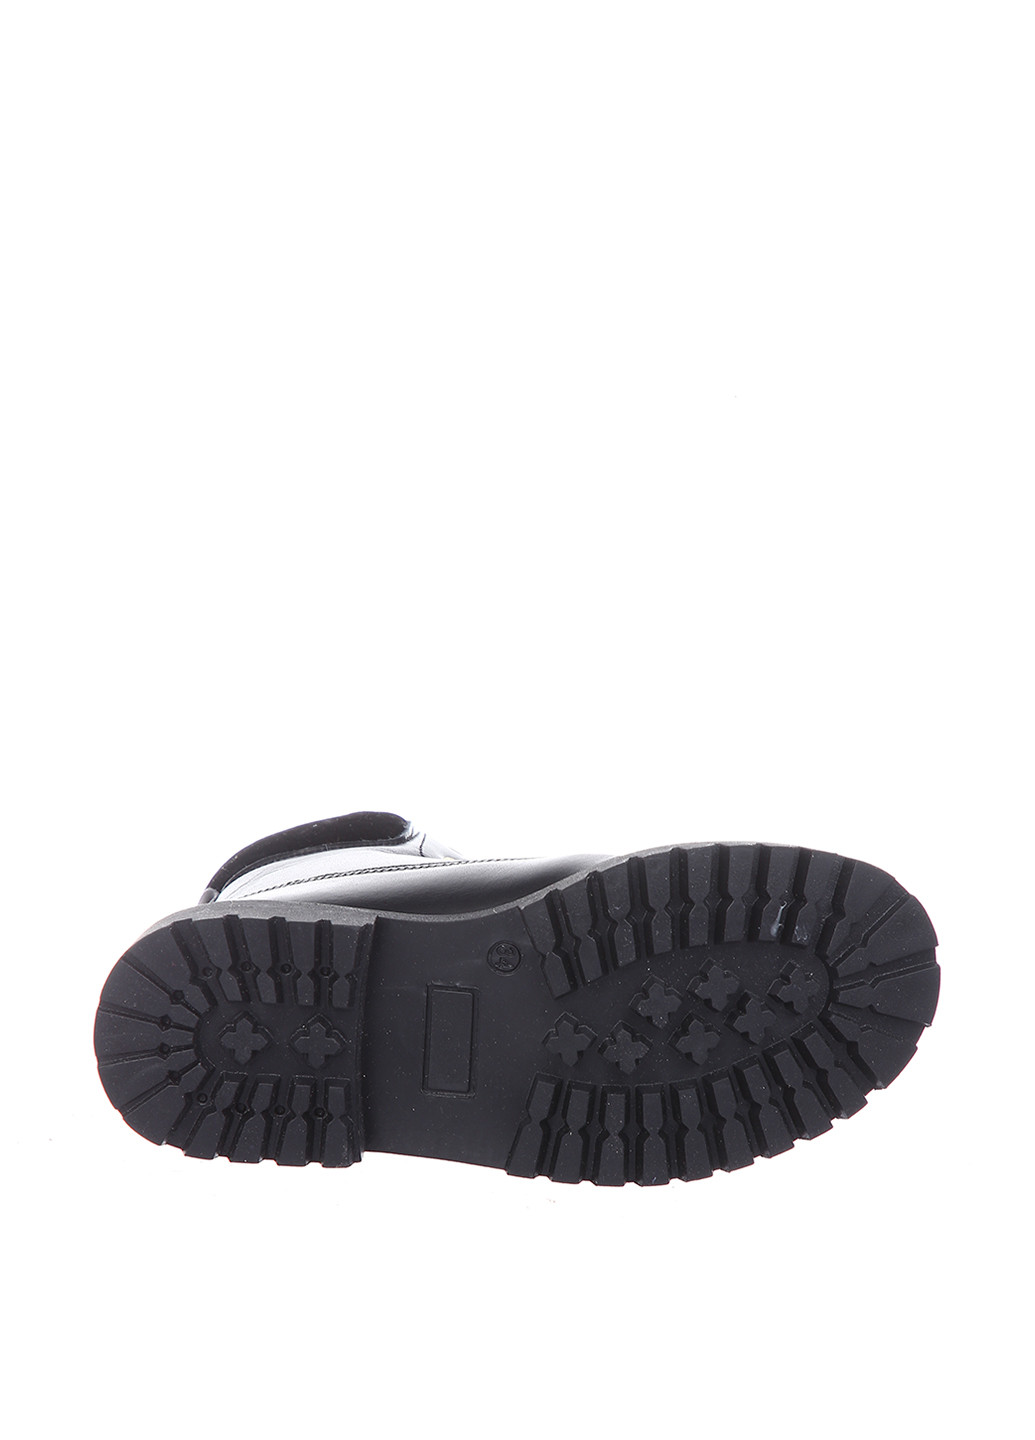 Черные кэжуал осенние ботинки SHO.E.B.76